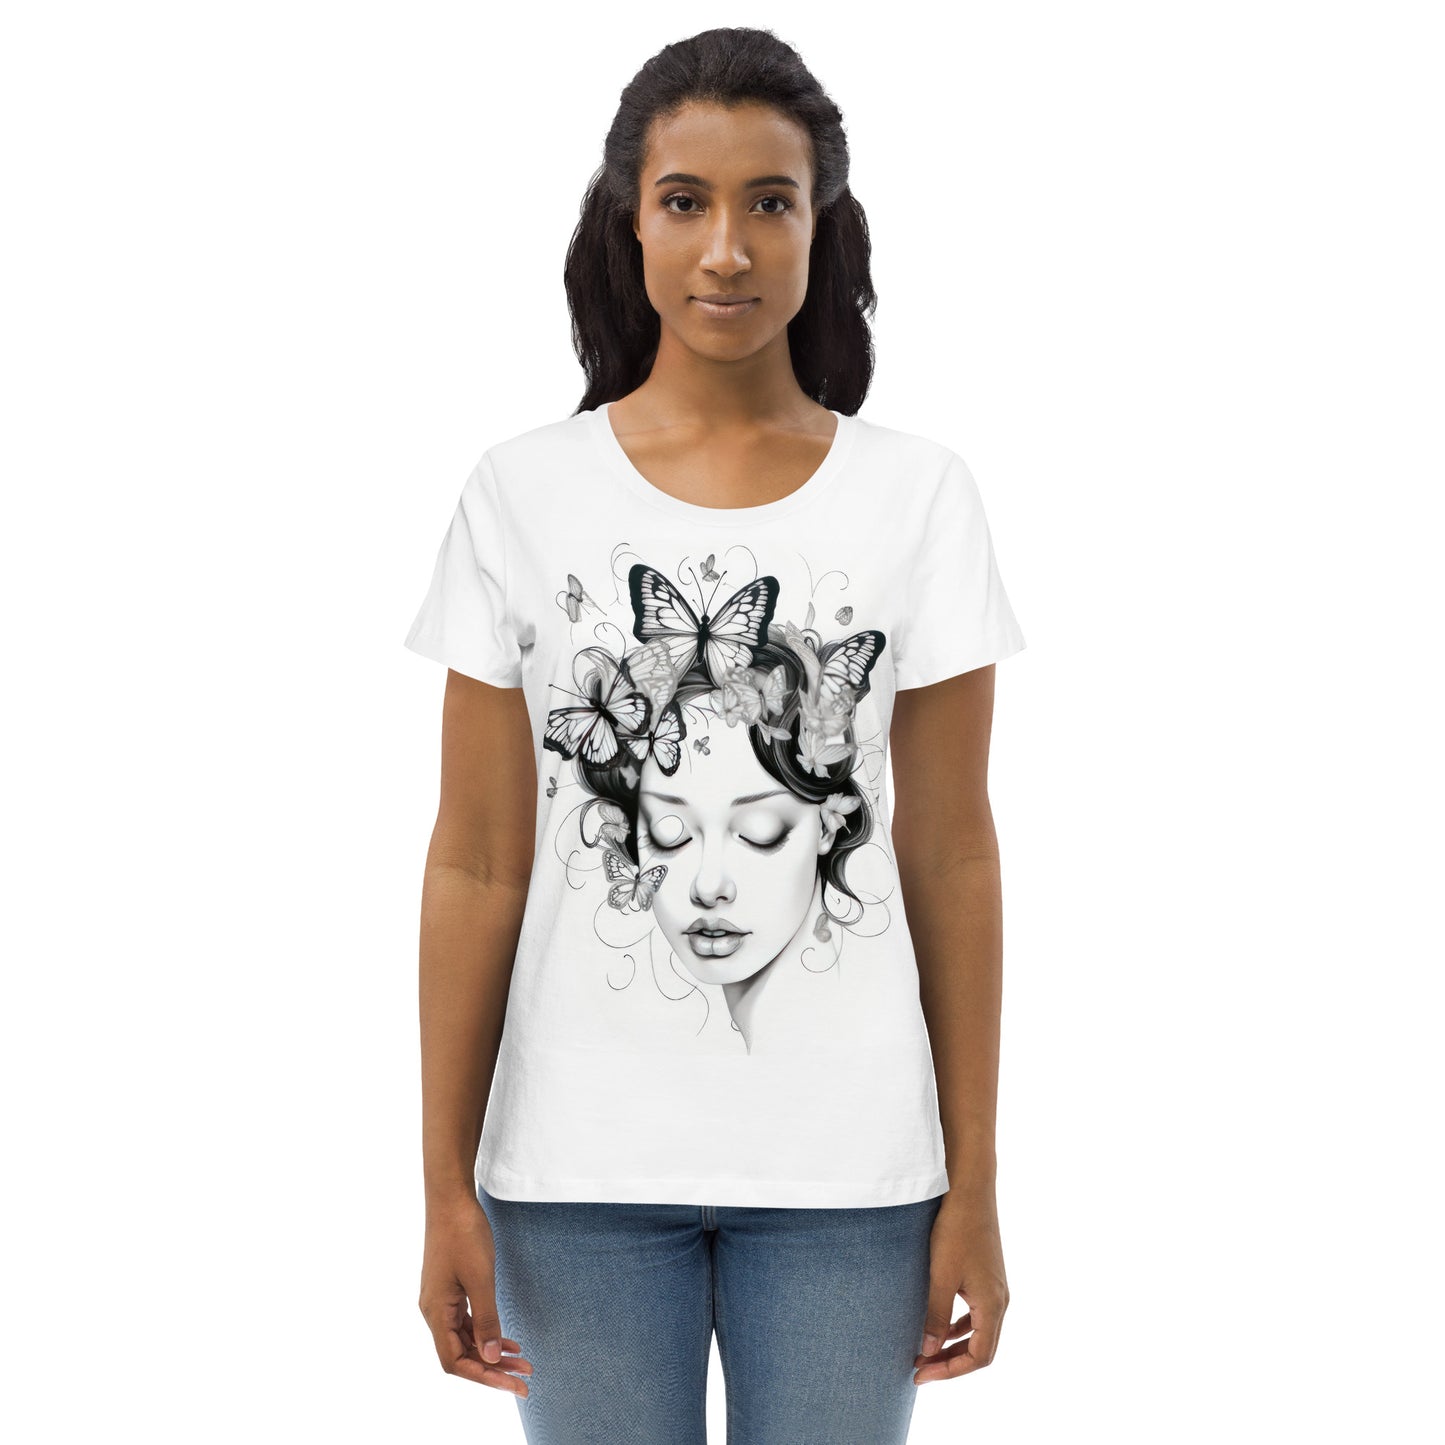 Women’s T-shirt, Organic Cotton T-shirt, Custom-Made, Eco-Friendly Tee